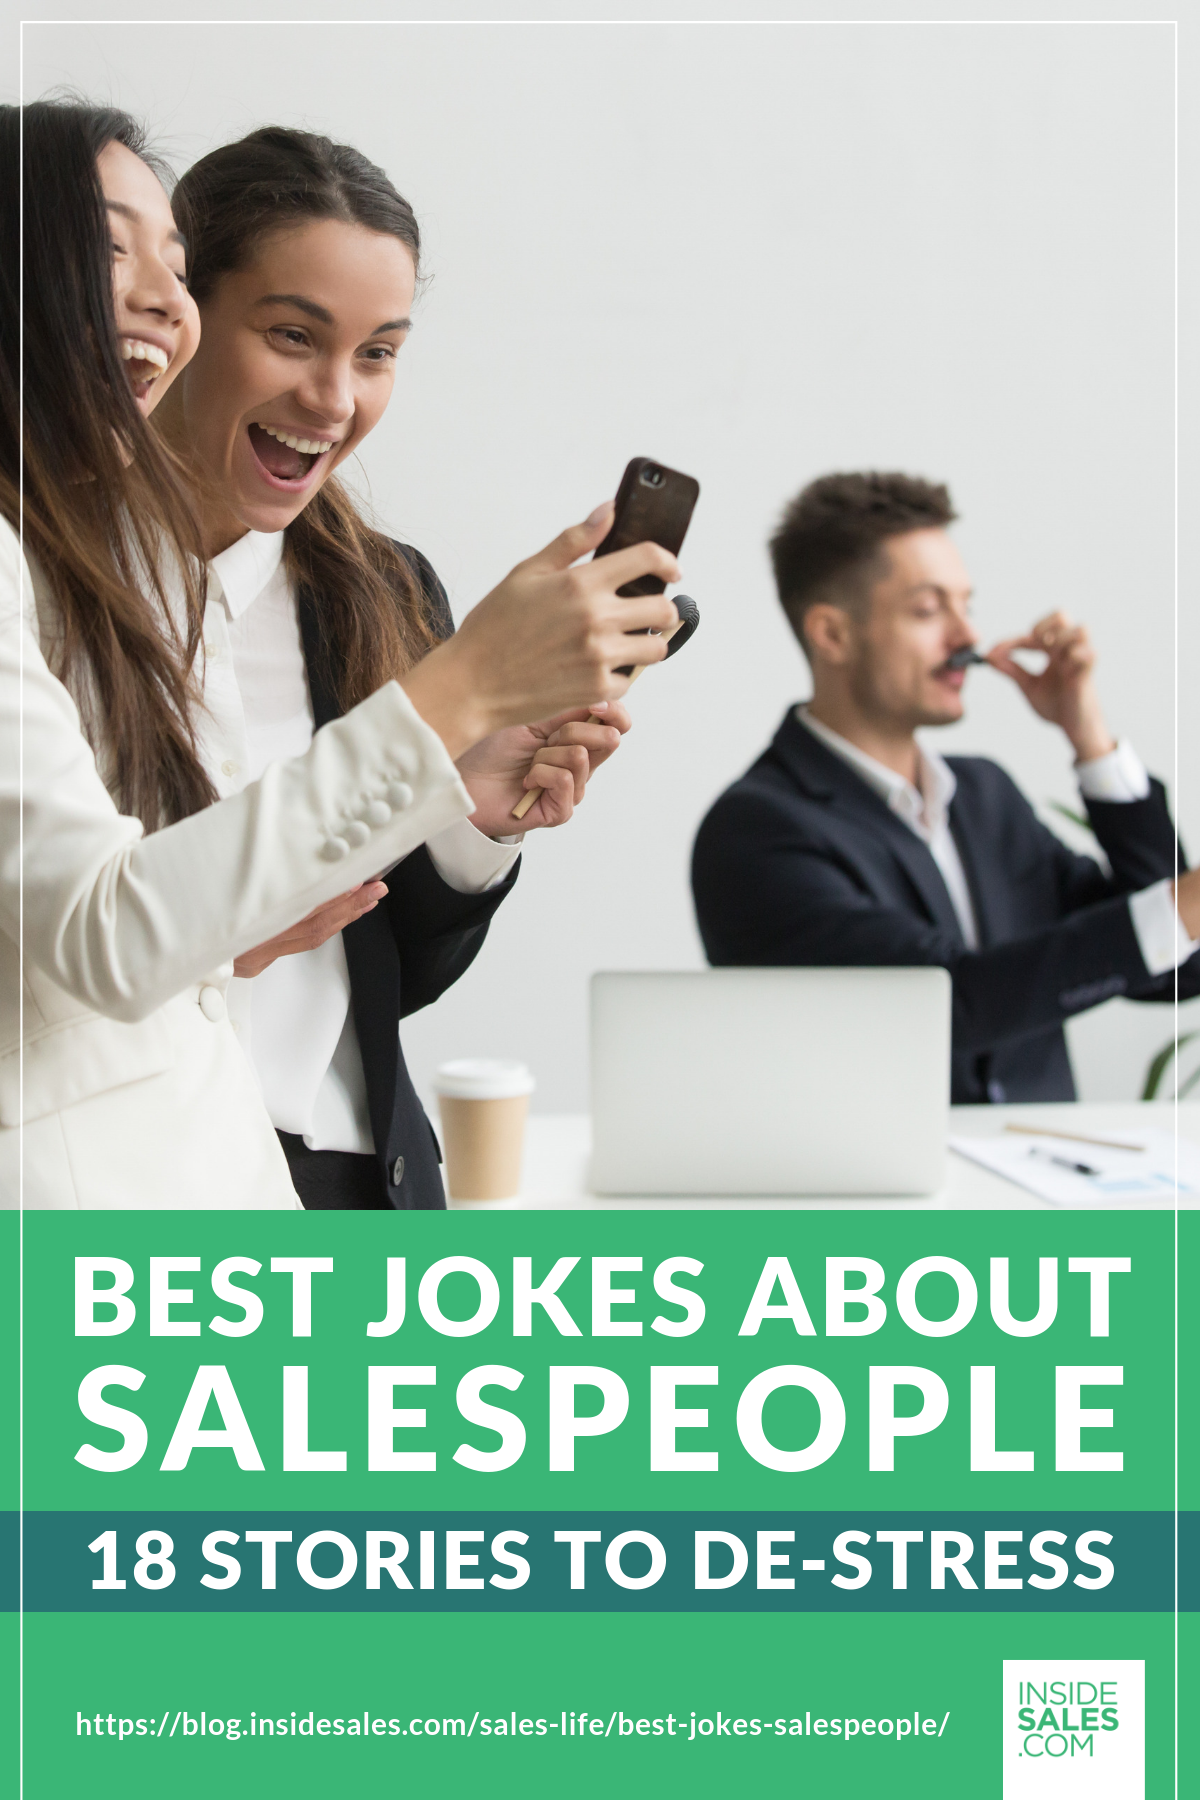 Best Jokes About Salespeople: 18 Stories To De-Stress https://www.insidesales.com/blog/sales-life/best-jokes-salespeople/